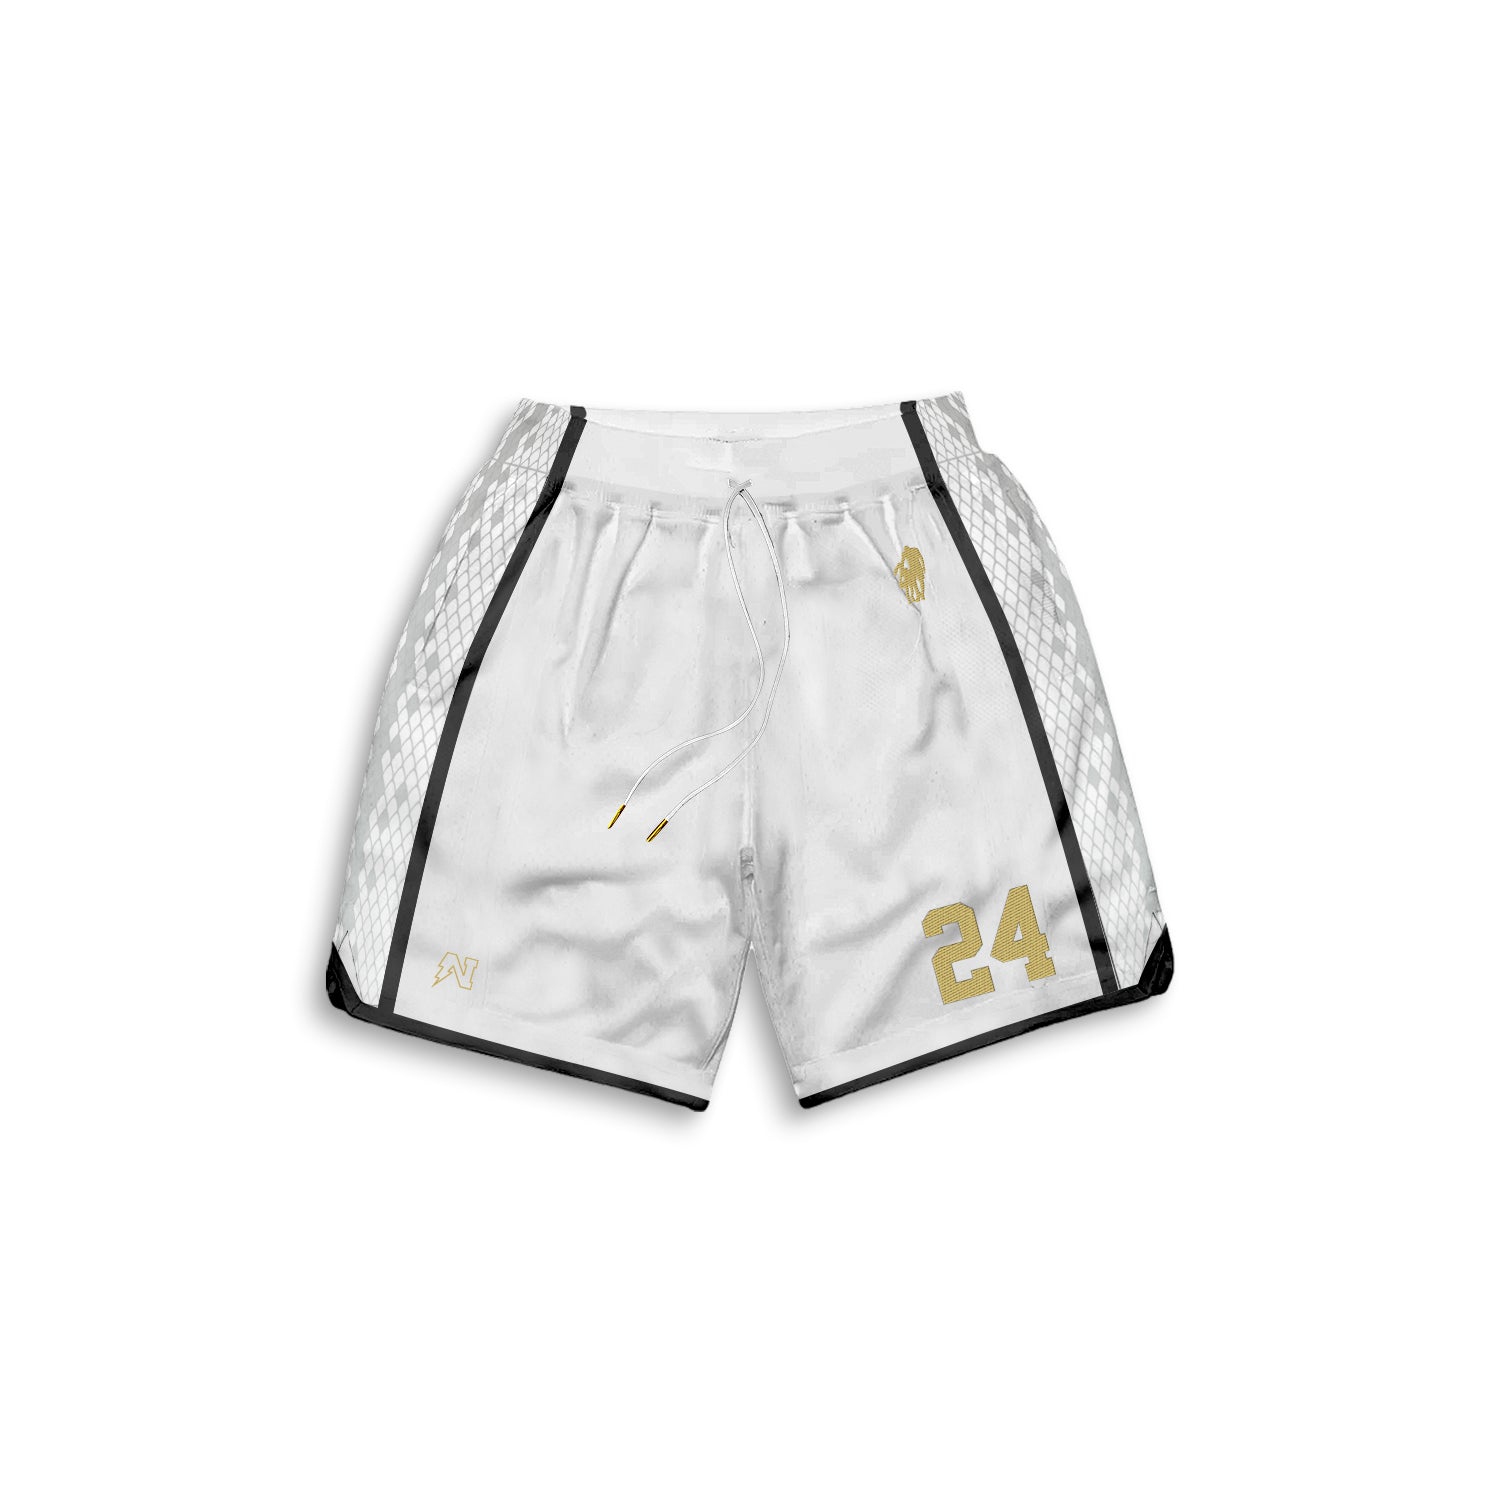 Customizable "Girl Dad" Basketball Shorts - White